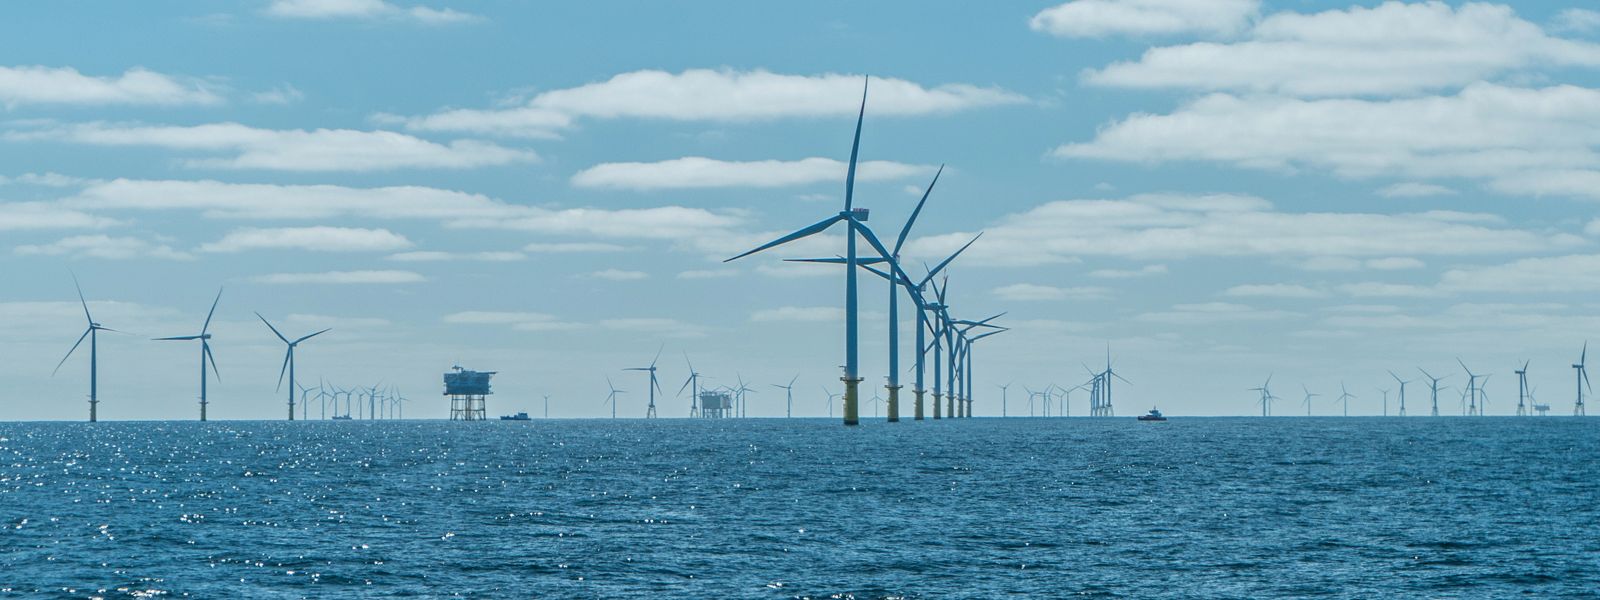 Stock image offshore windmill farm